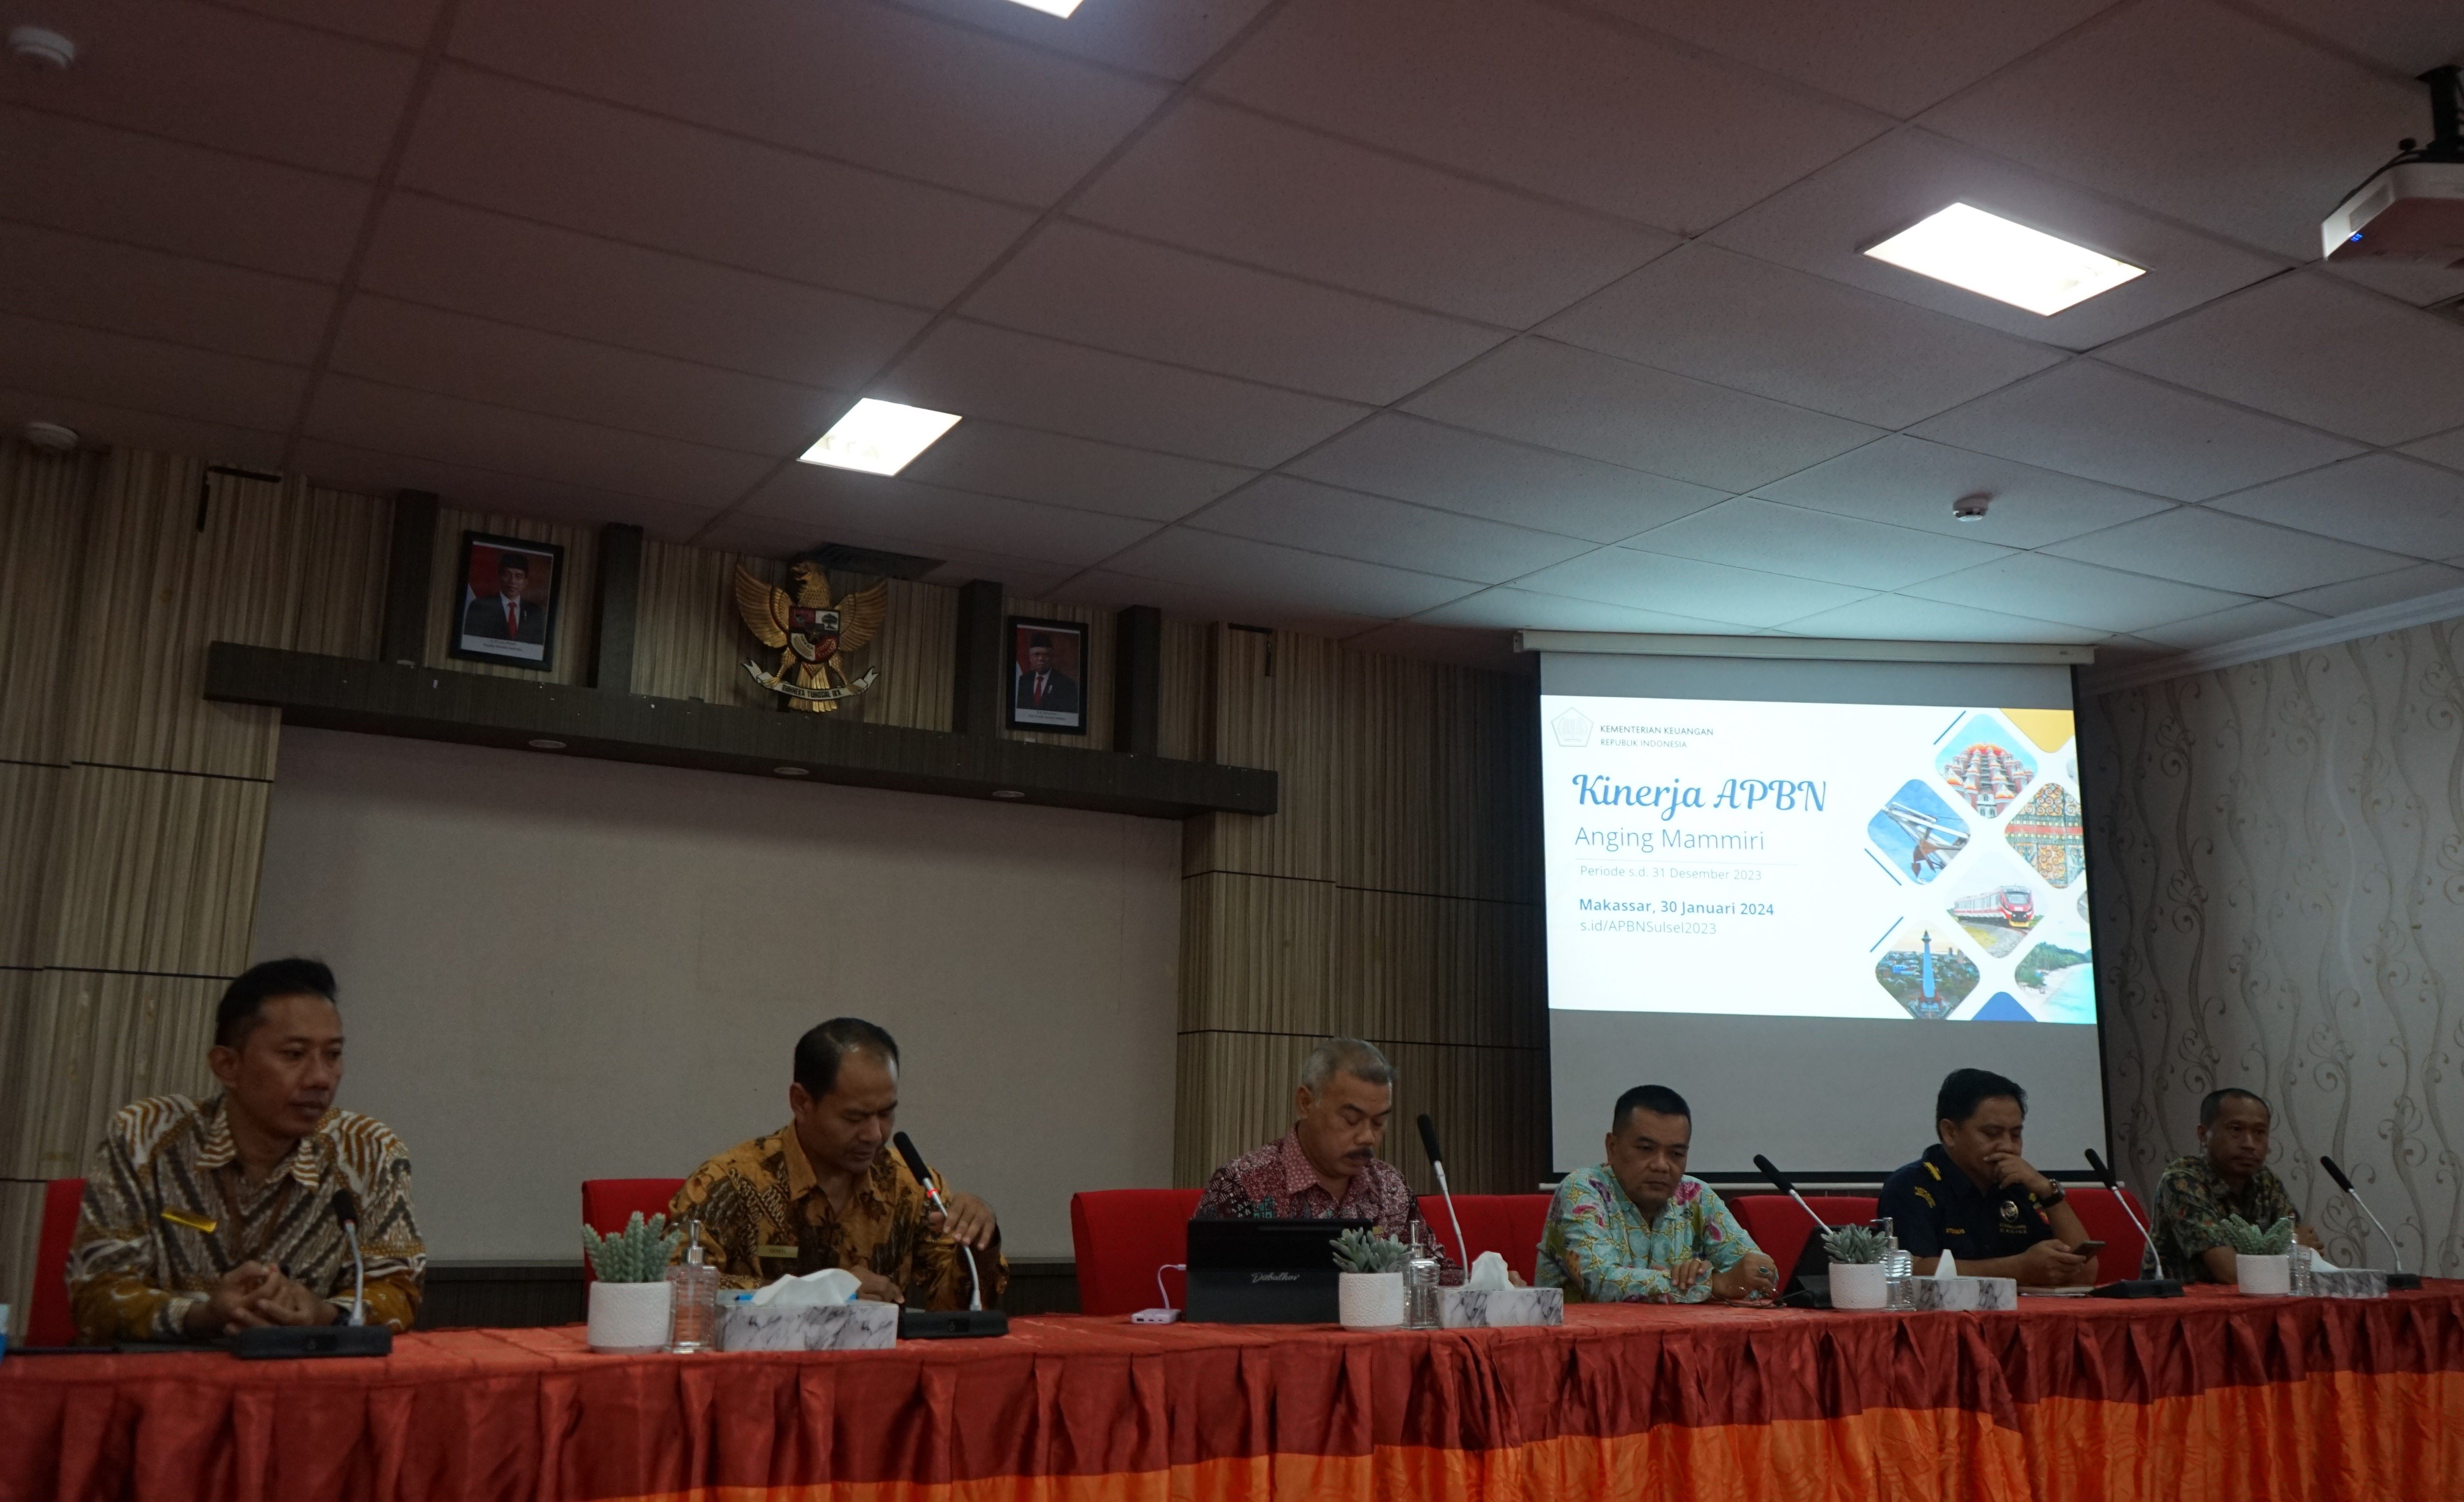 Konferensi Pers APBN Anging Mammiri: Kinerja APBN Sulawesi Selatan s.d 31 Desember